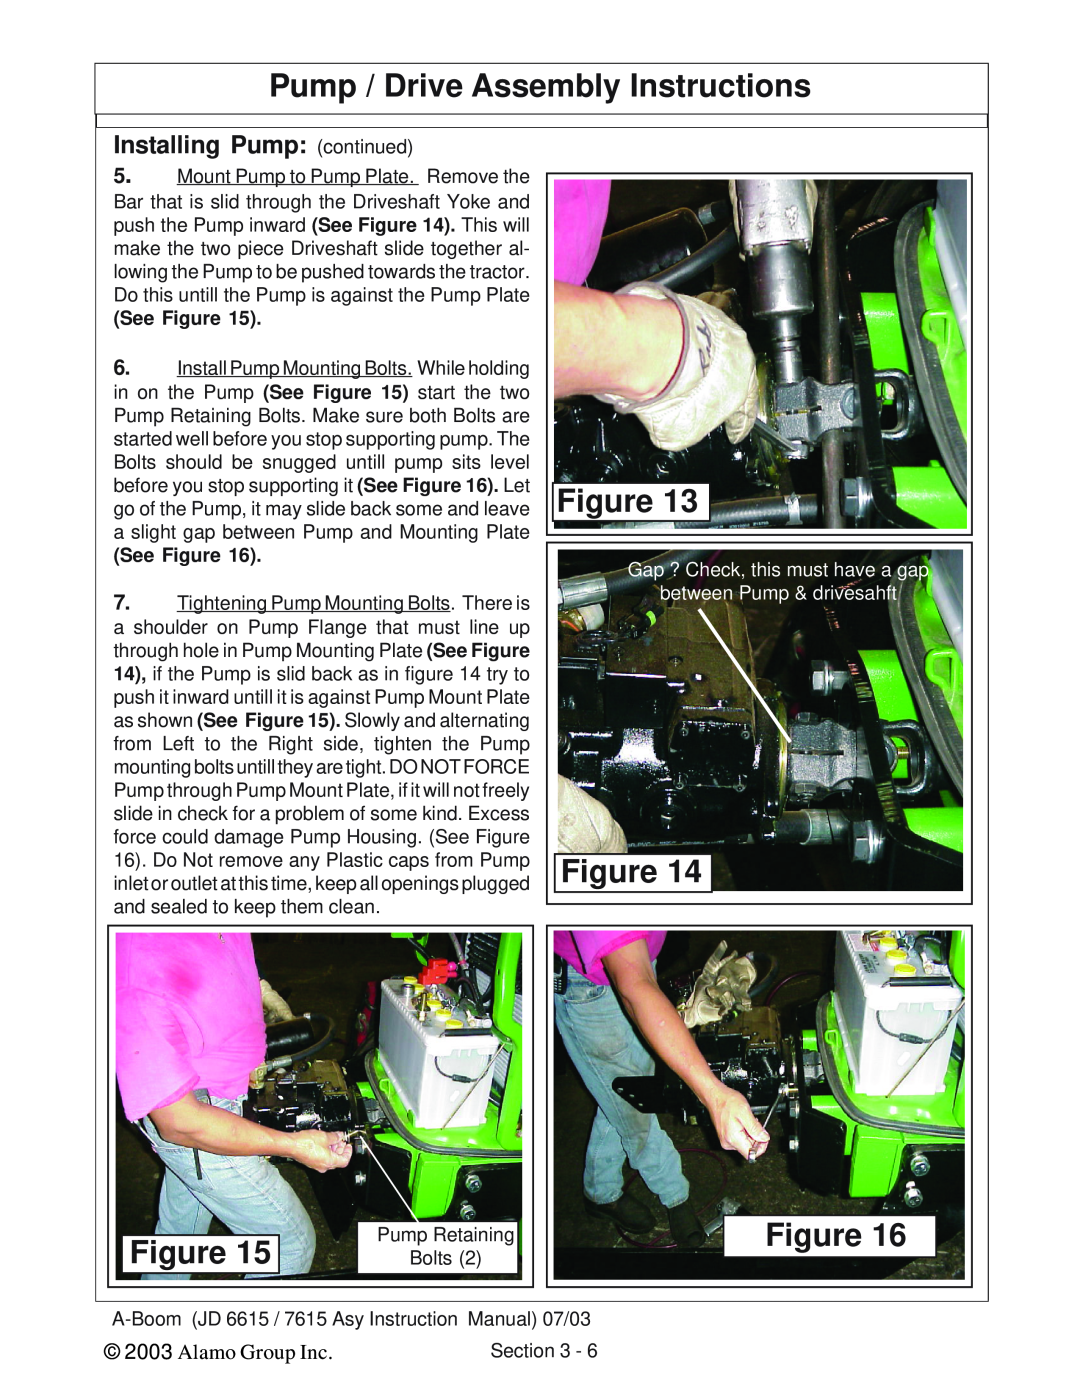 Alamo DSEB-D16/SAS Installing Pump continued, Pump / Drive Assembly Instructions, Alamo Group Inc, See Figure 